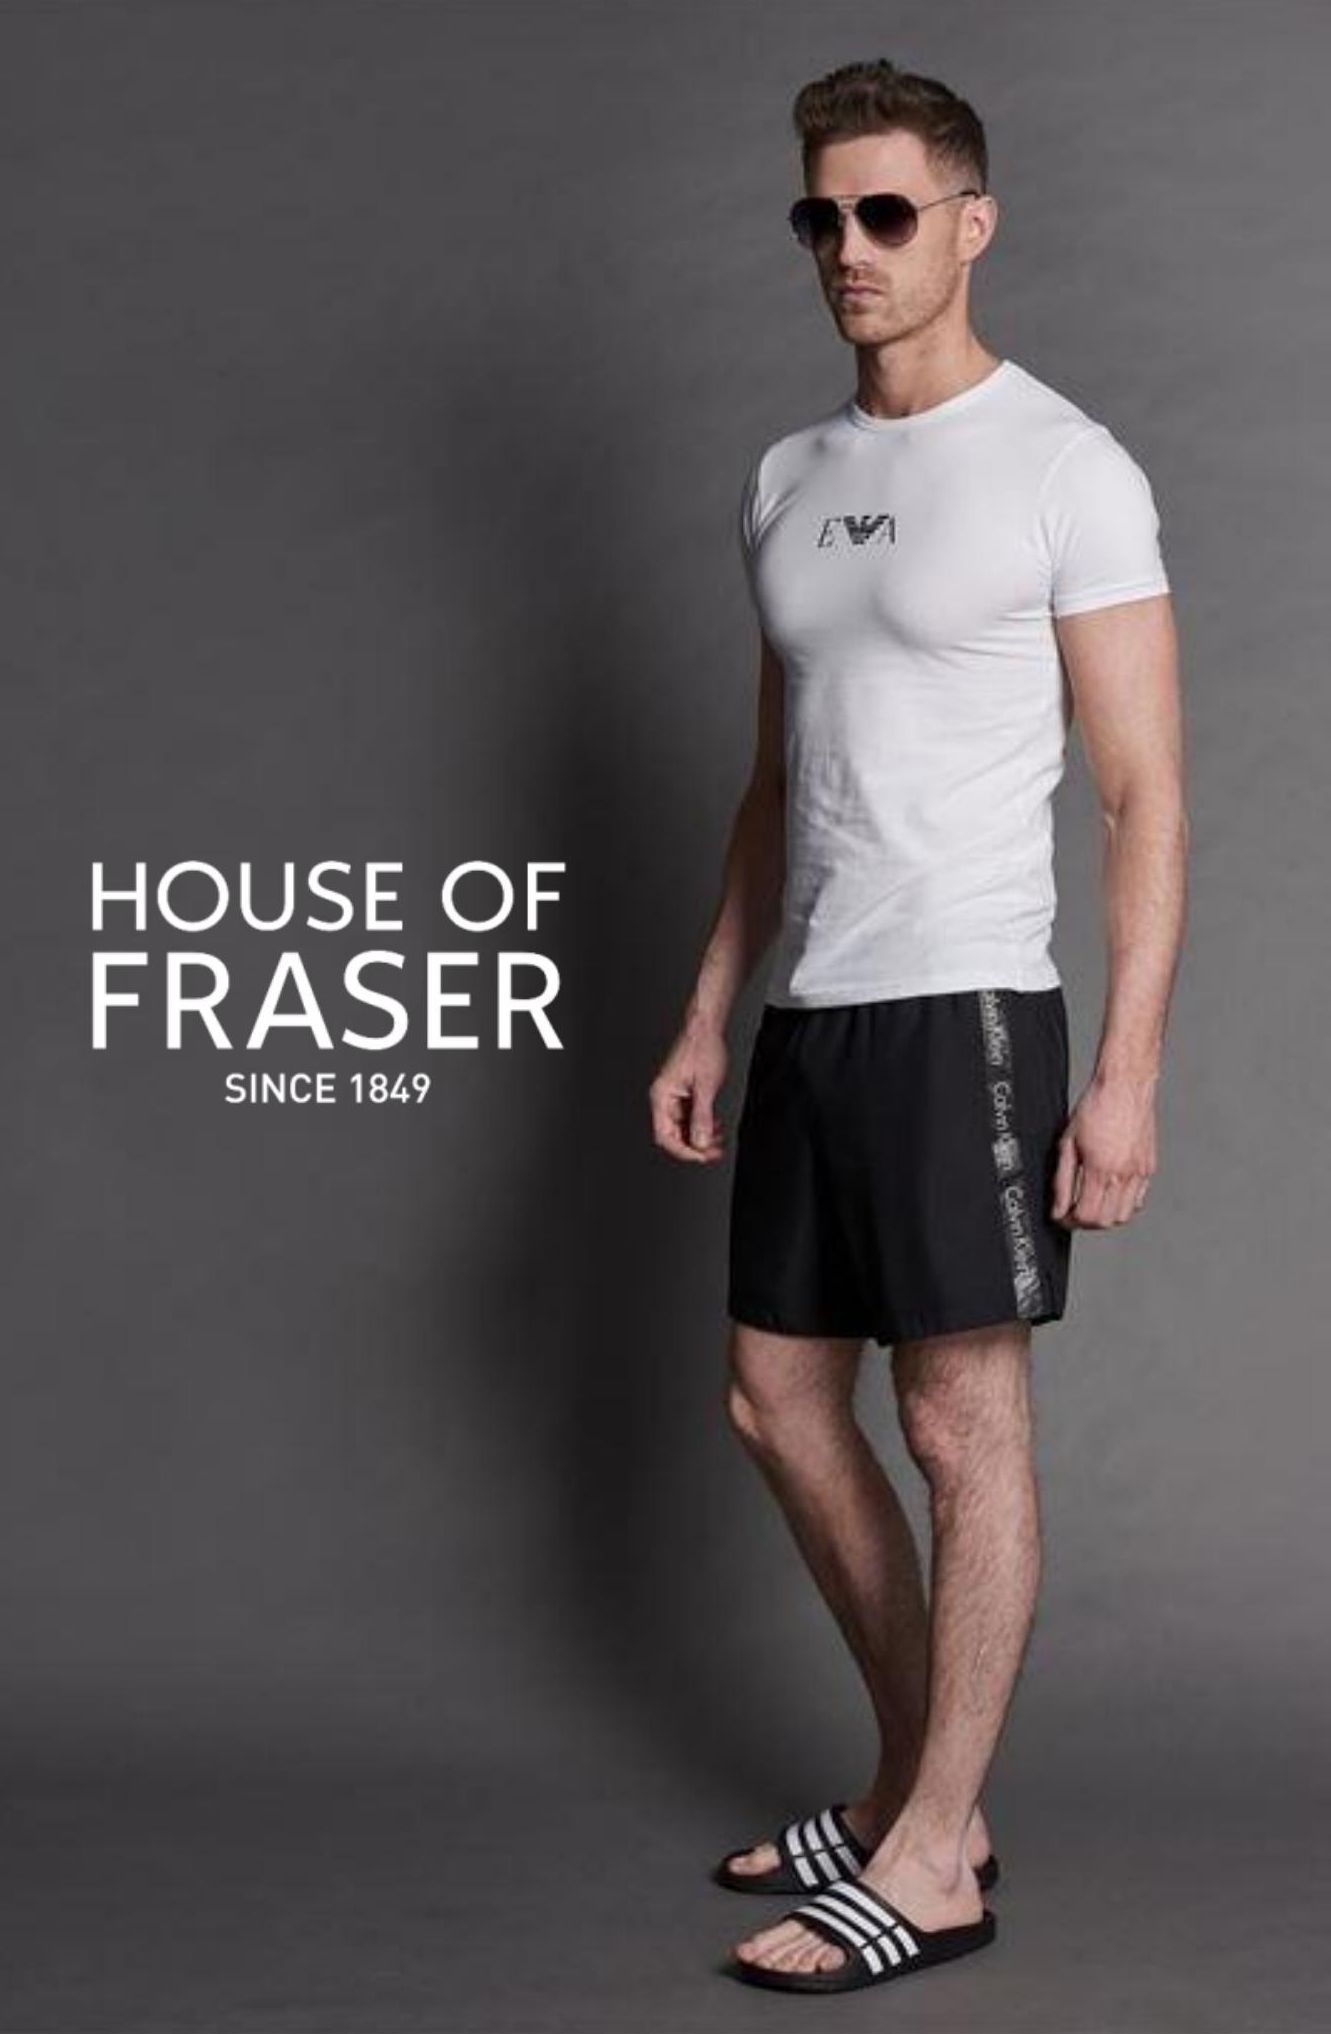 Season offers in House of Fraser